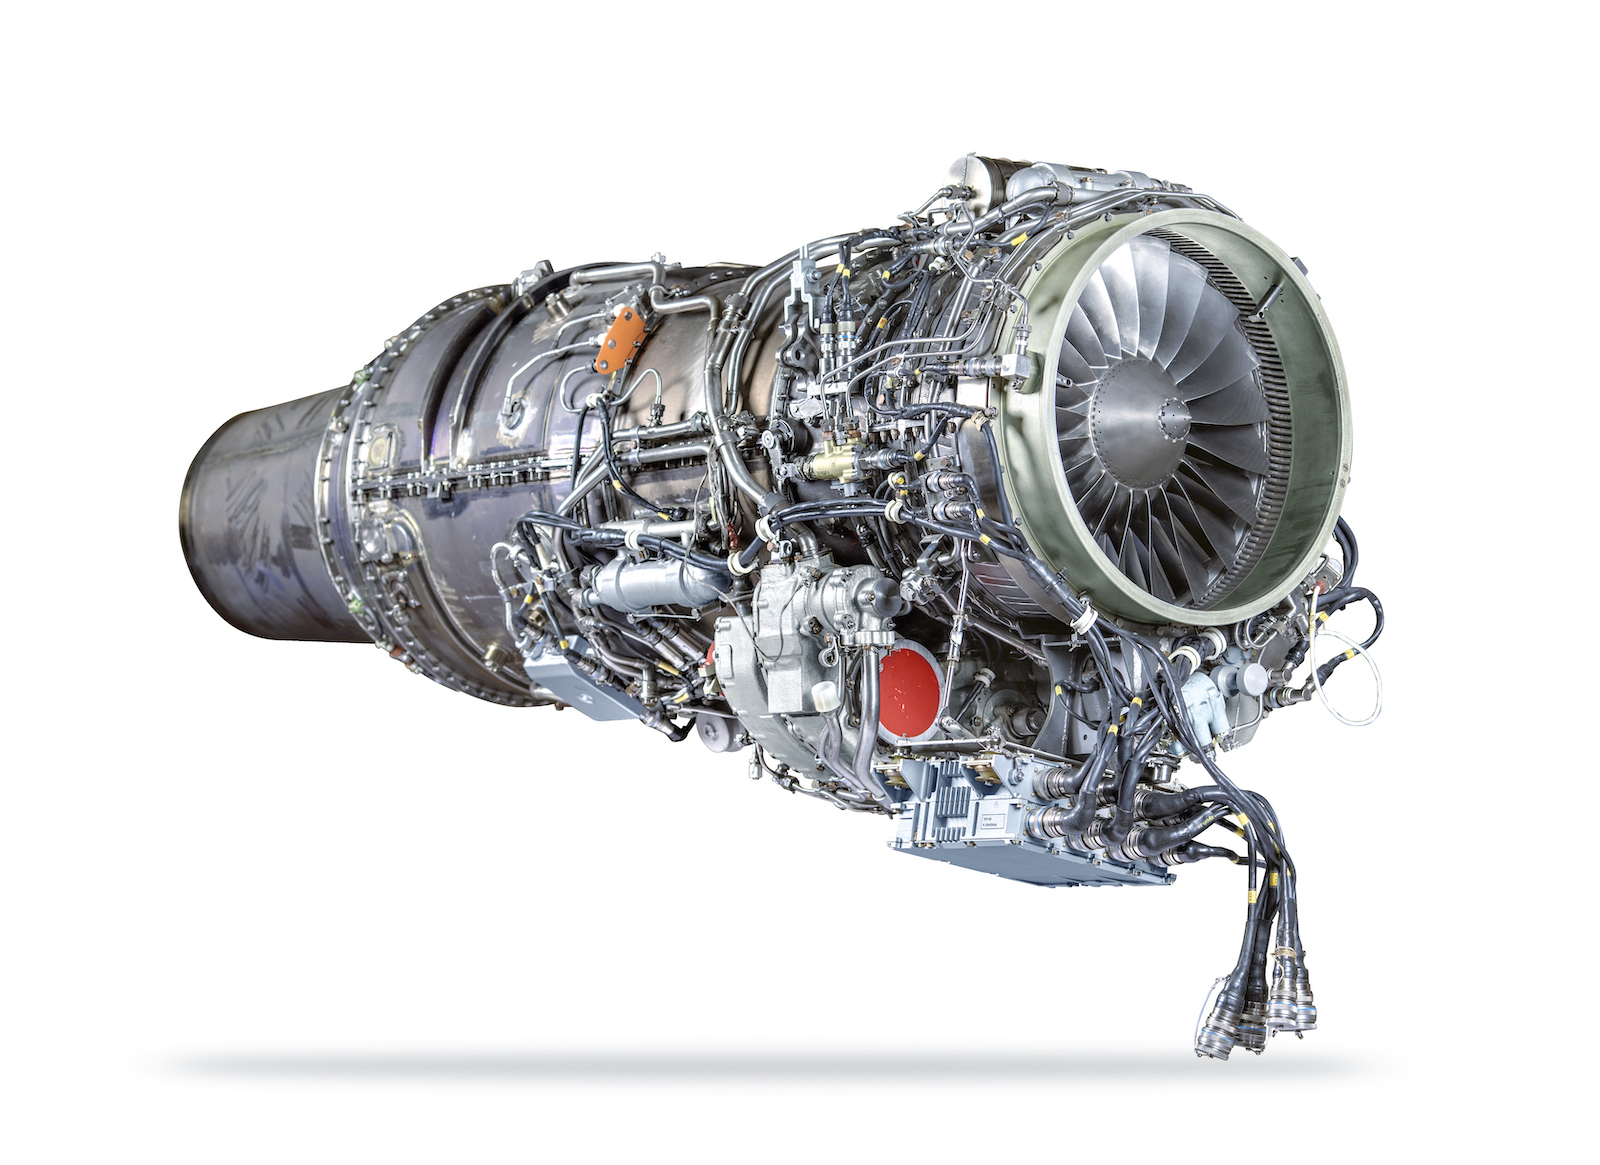 United Engine Corporation AL-55I jet engine